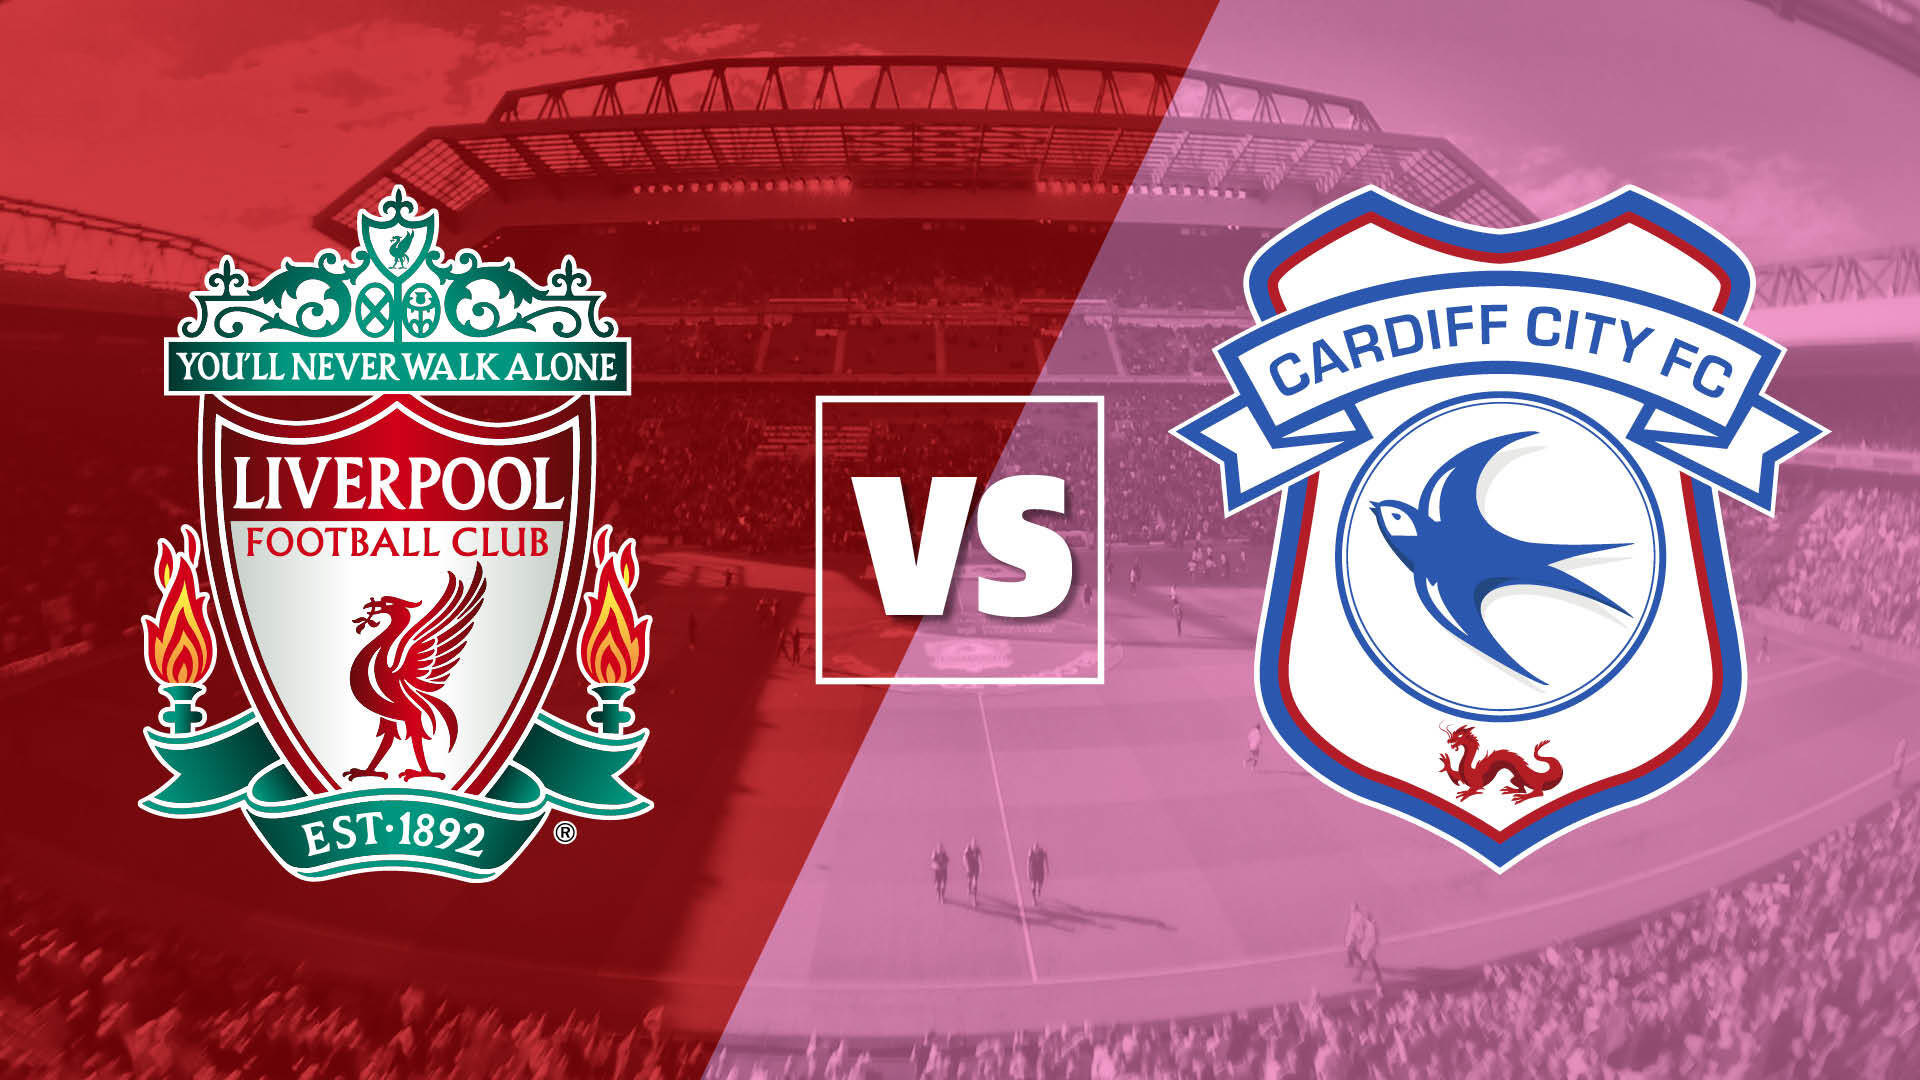 Liverpool vs cardiff